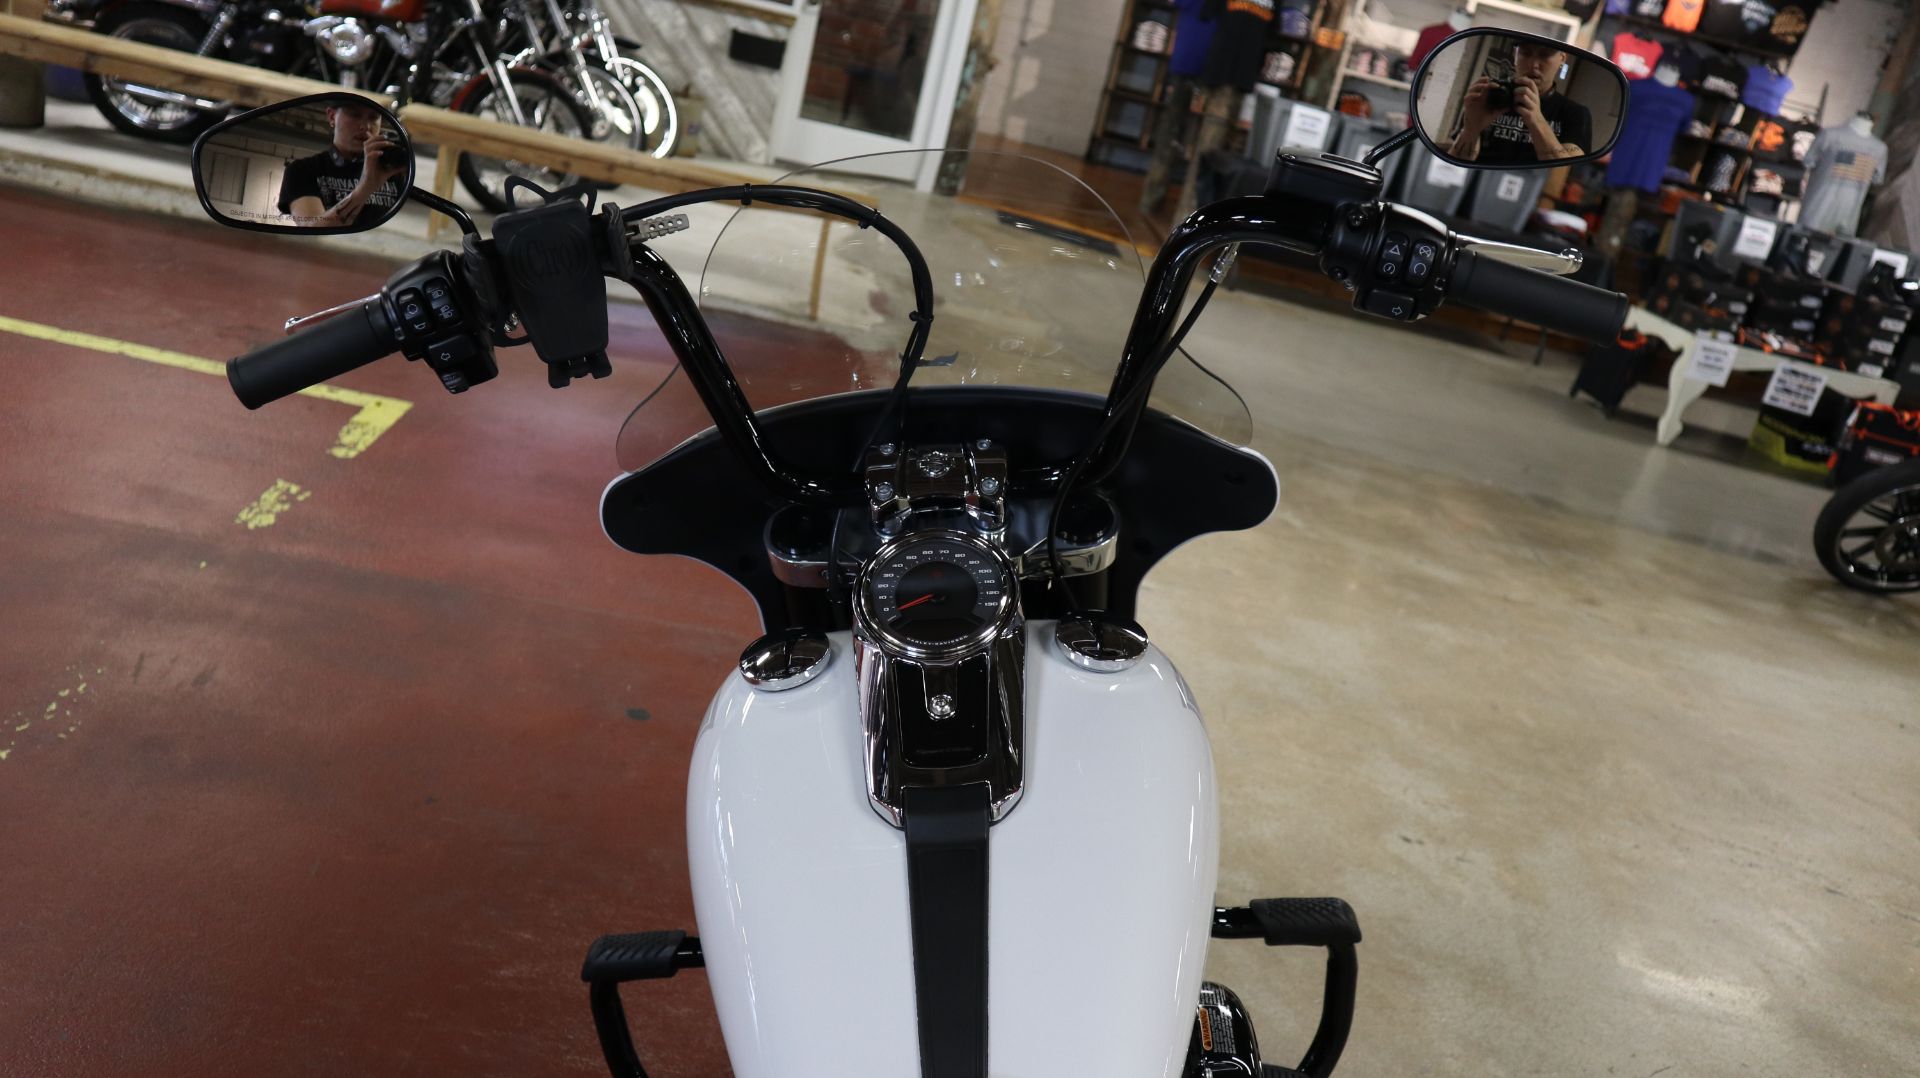 2021 Harley-Davidson Sport Glide® in New London, Connecticut - Photo 10